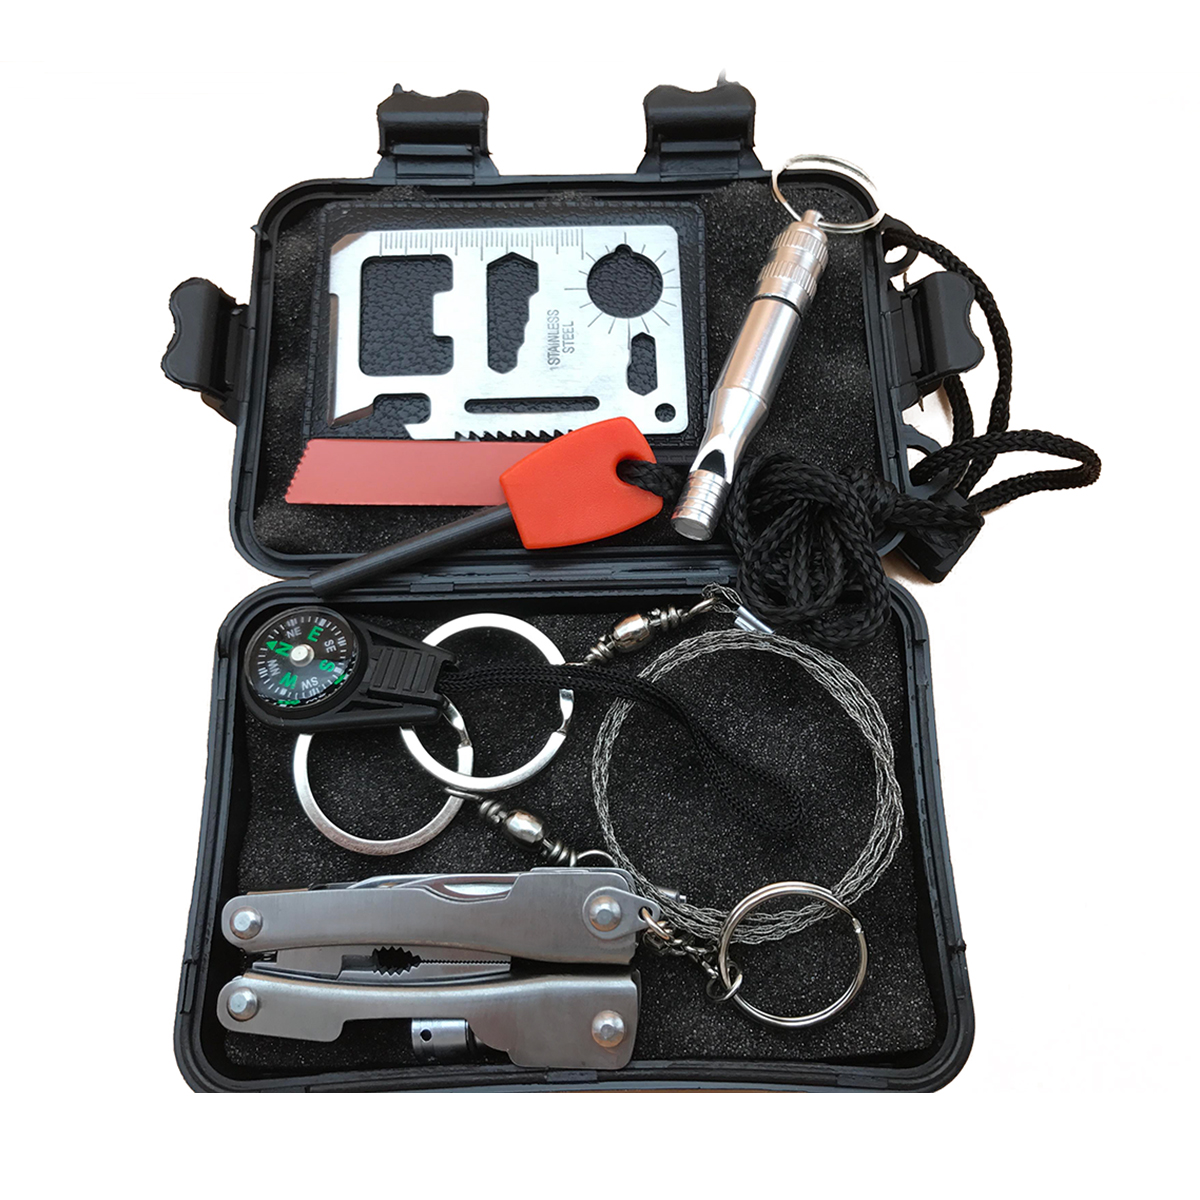 

SOS Emergency Equipment Tool Kit First Aid Box Outdoor Supplies Survival Gear